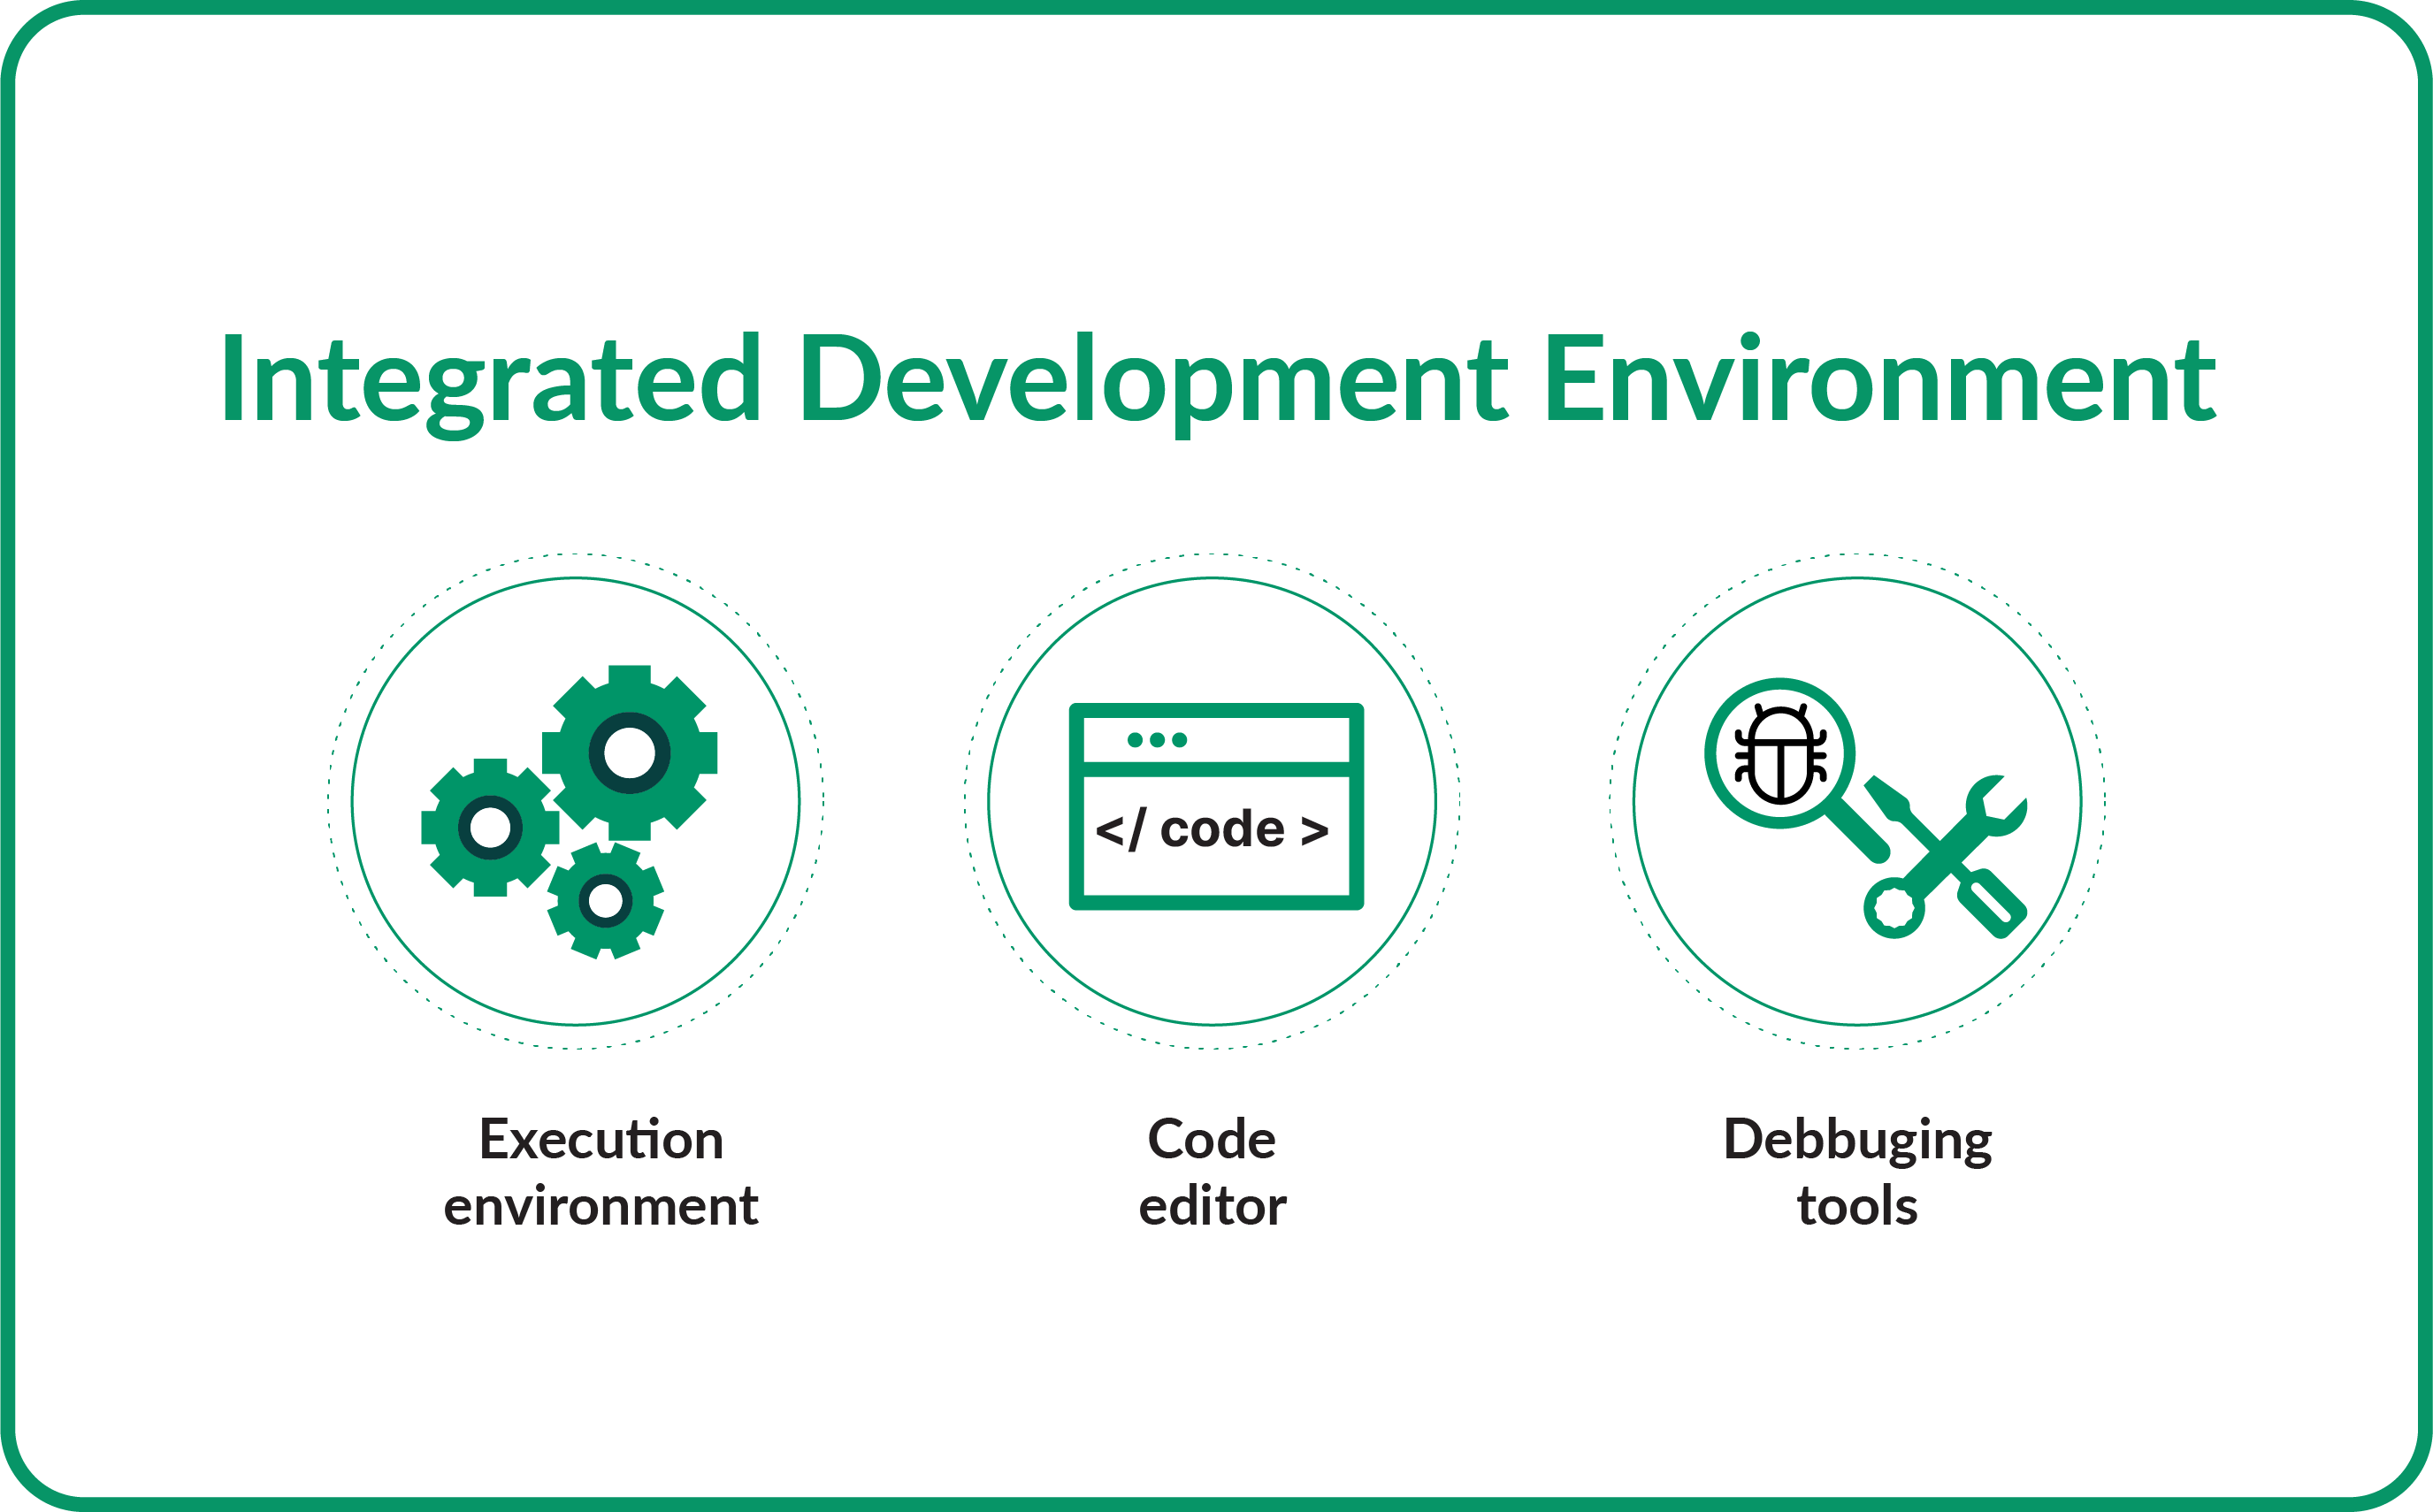 Main building blocks of Integrated Development Environments.